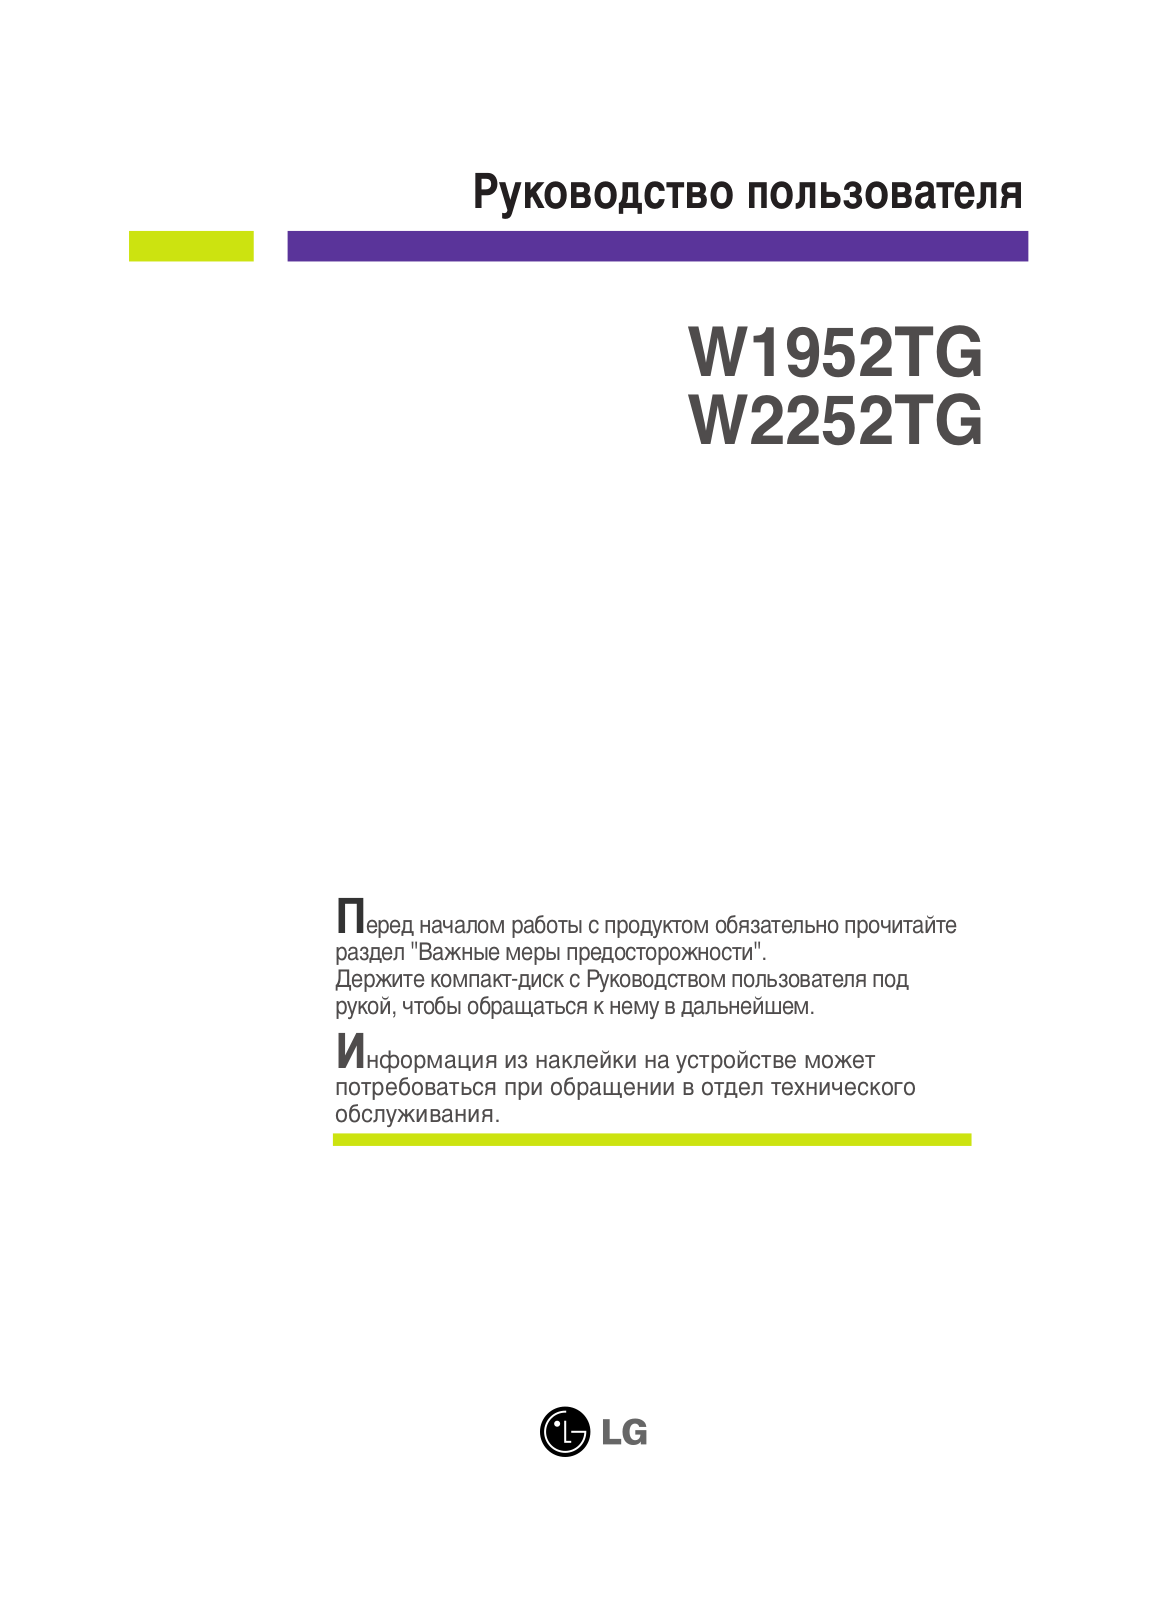 LG W2252TG User Manual